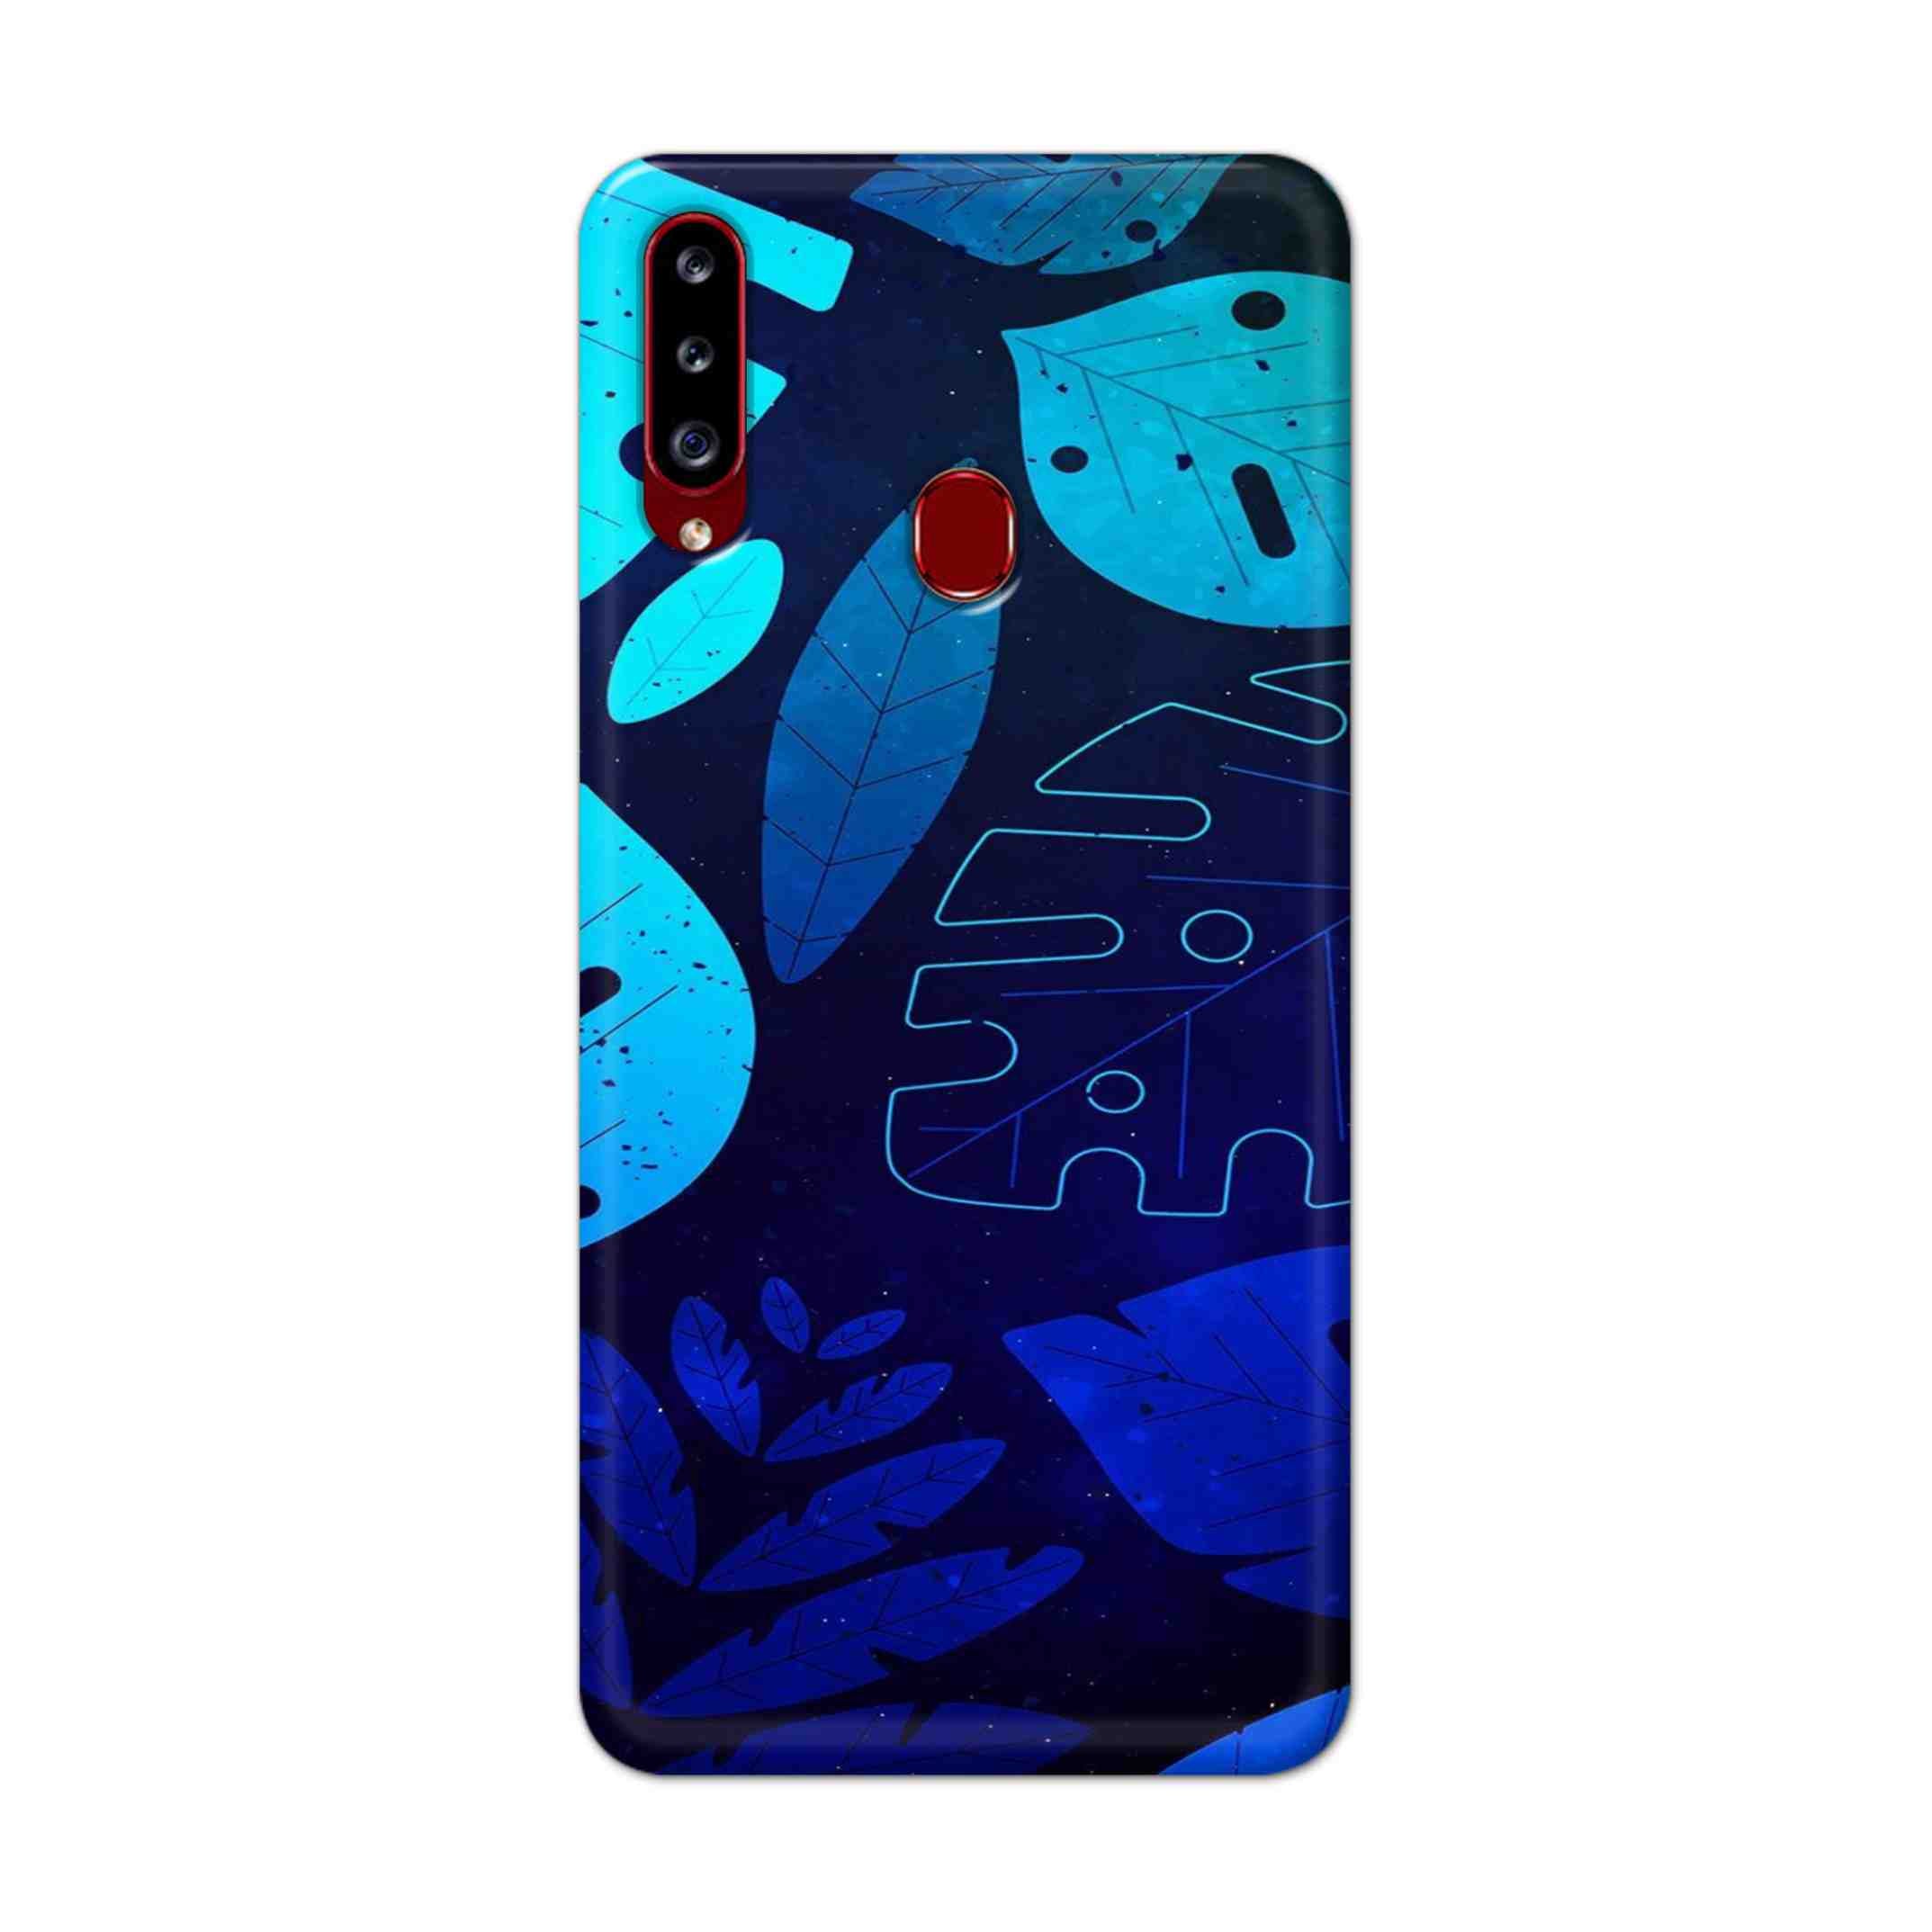 Buy Neon Leaf Hard Back Mobile Phone Case Cover For Samsung A20s Online